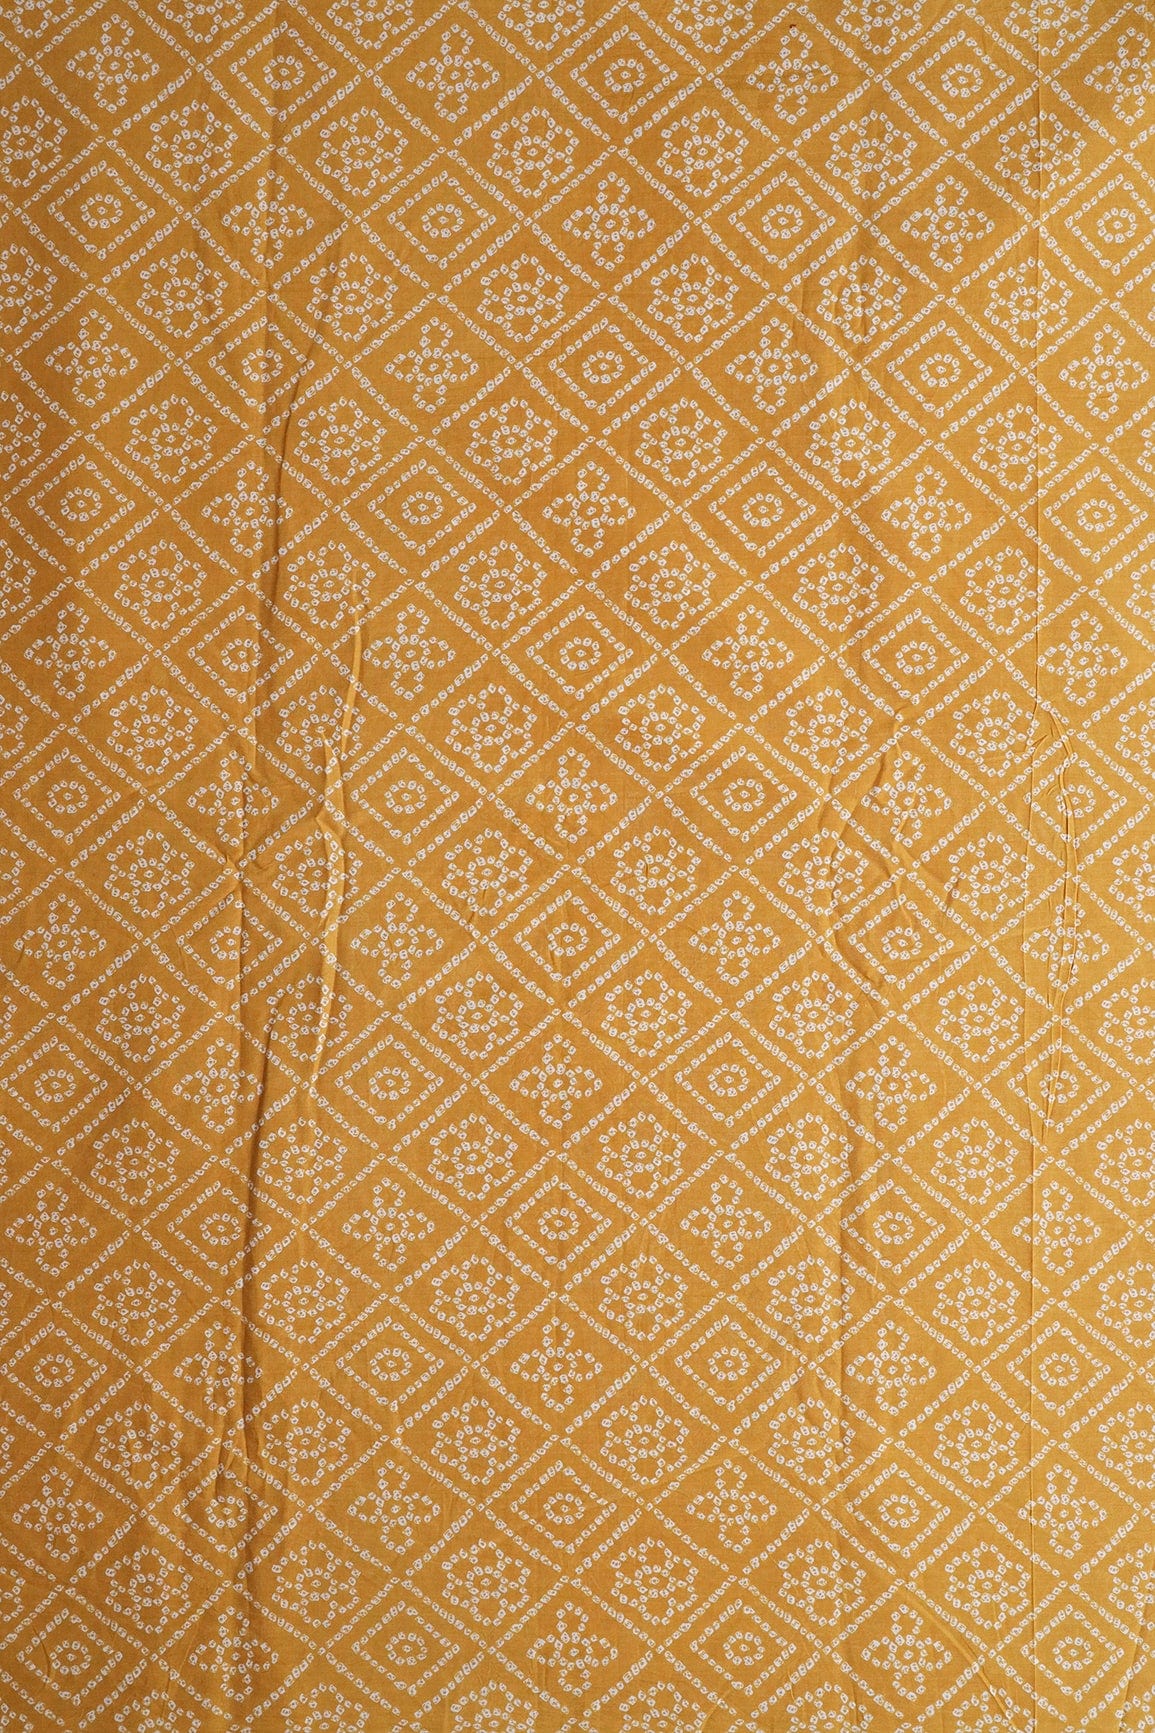 doeraa Prints Mustard Yellow And White Bandhani Print On Pure Cotton Fabric